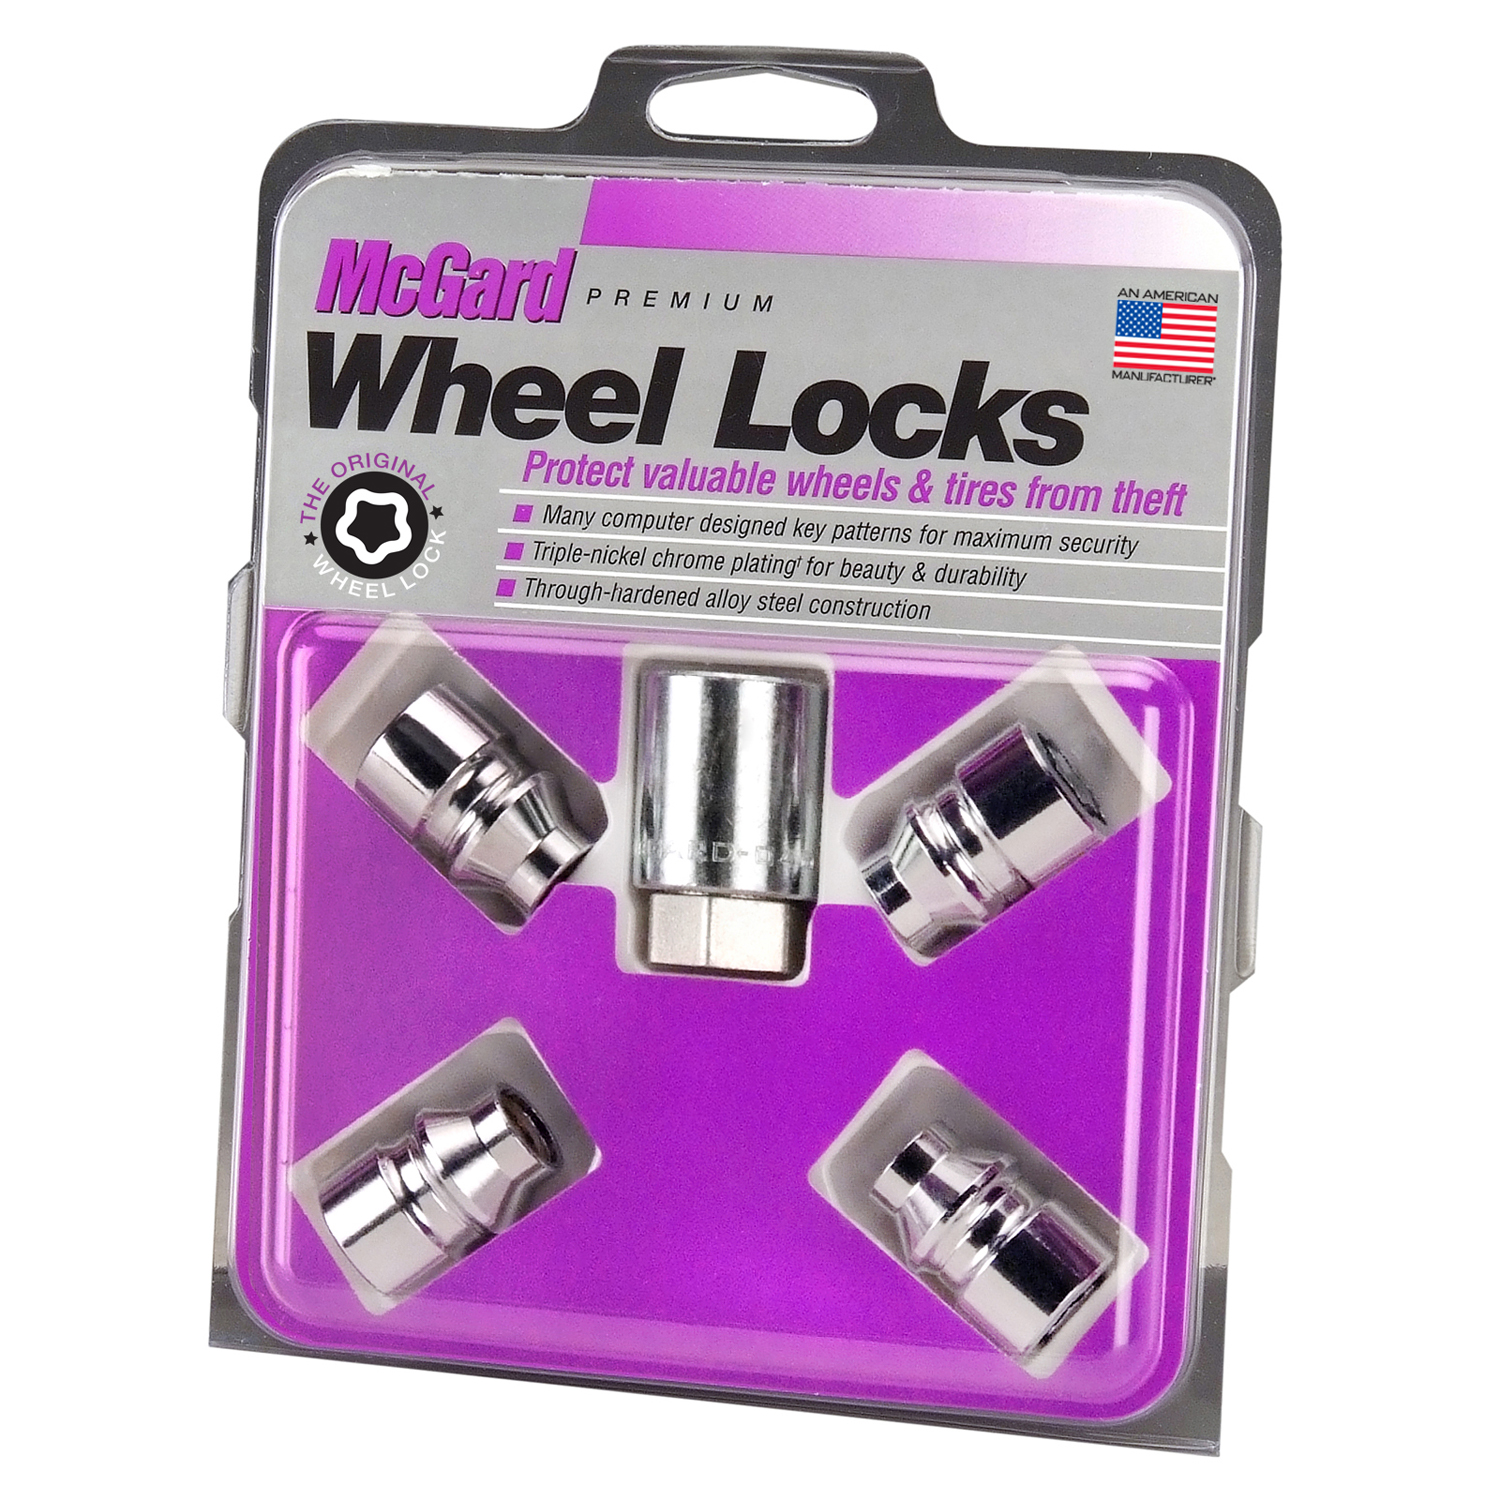 McGard Locking Wheel Nuts 12x1.5 Bolts for Ford Capri 68-87 